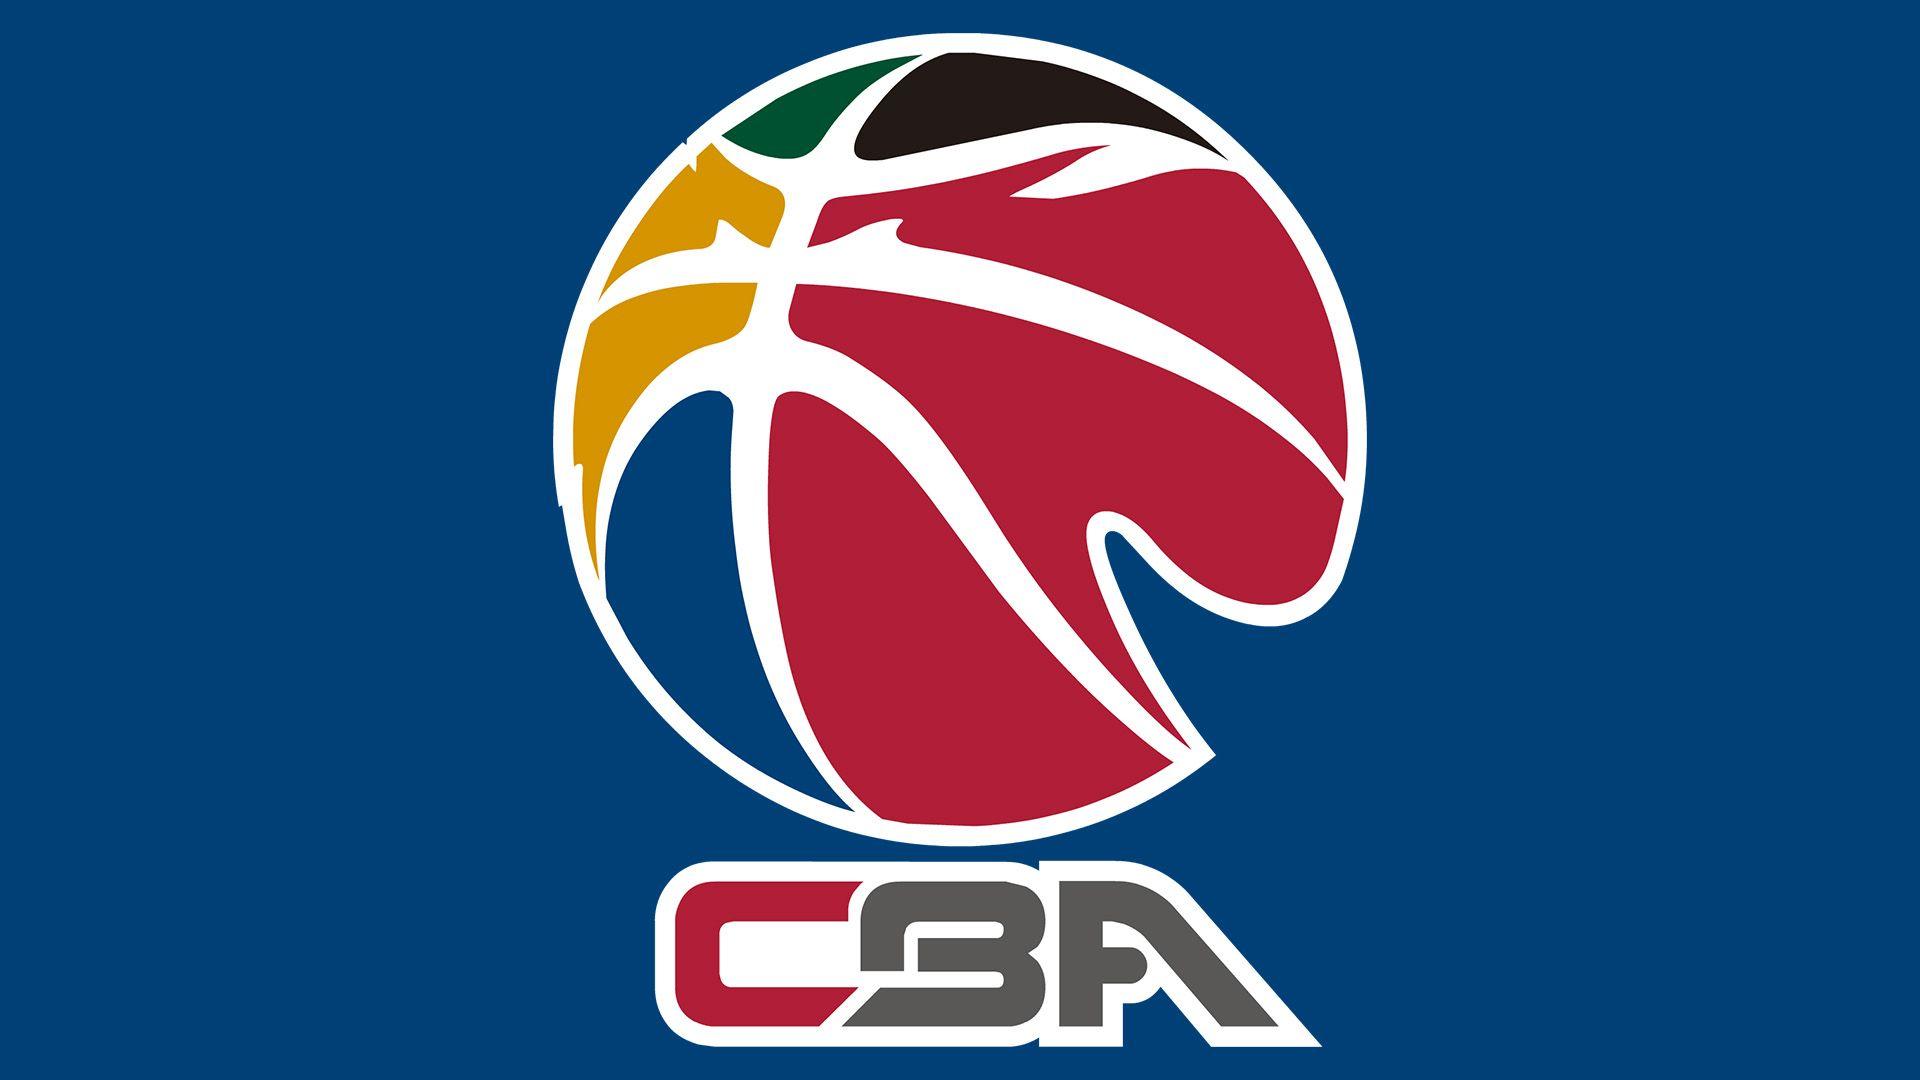 CBA Logo - Chinese Basketball Associatio logo, symbol, meaning, History and ...